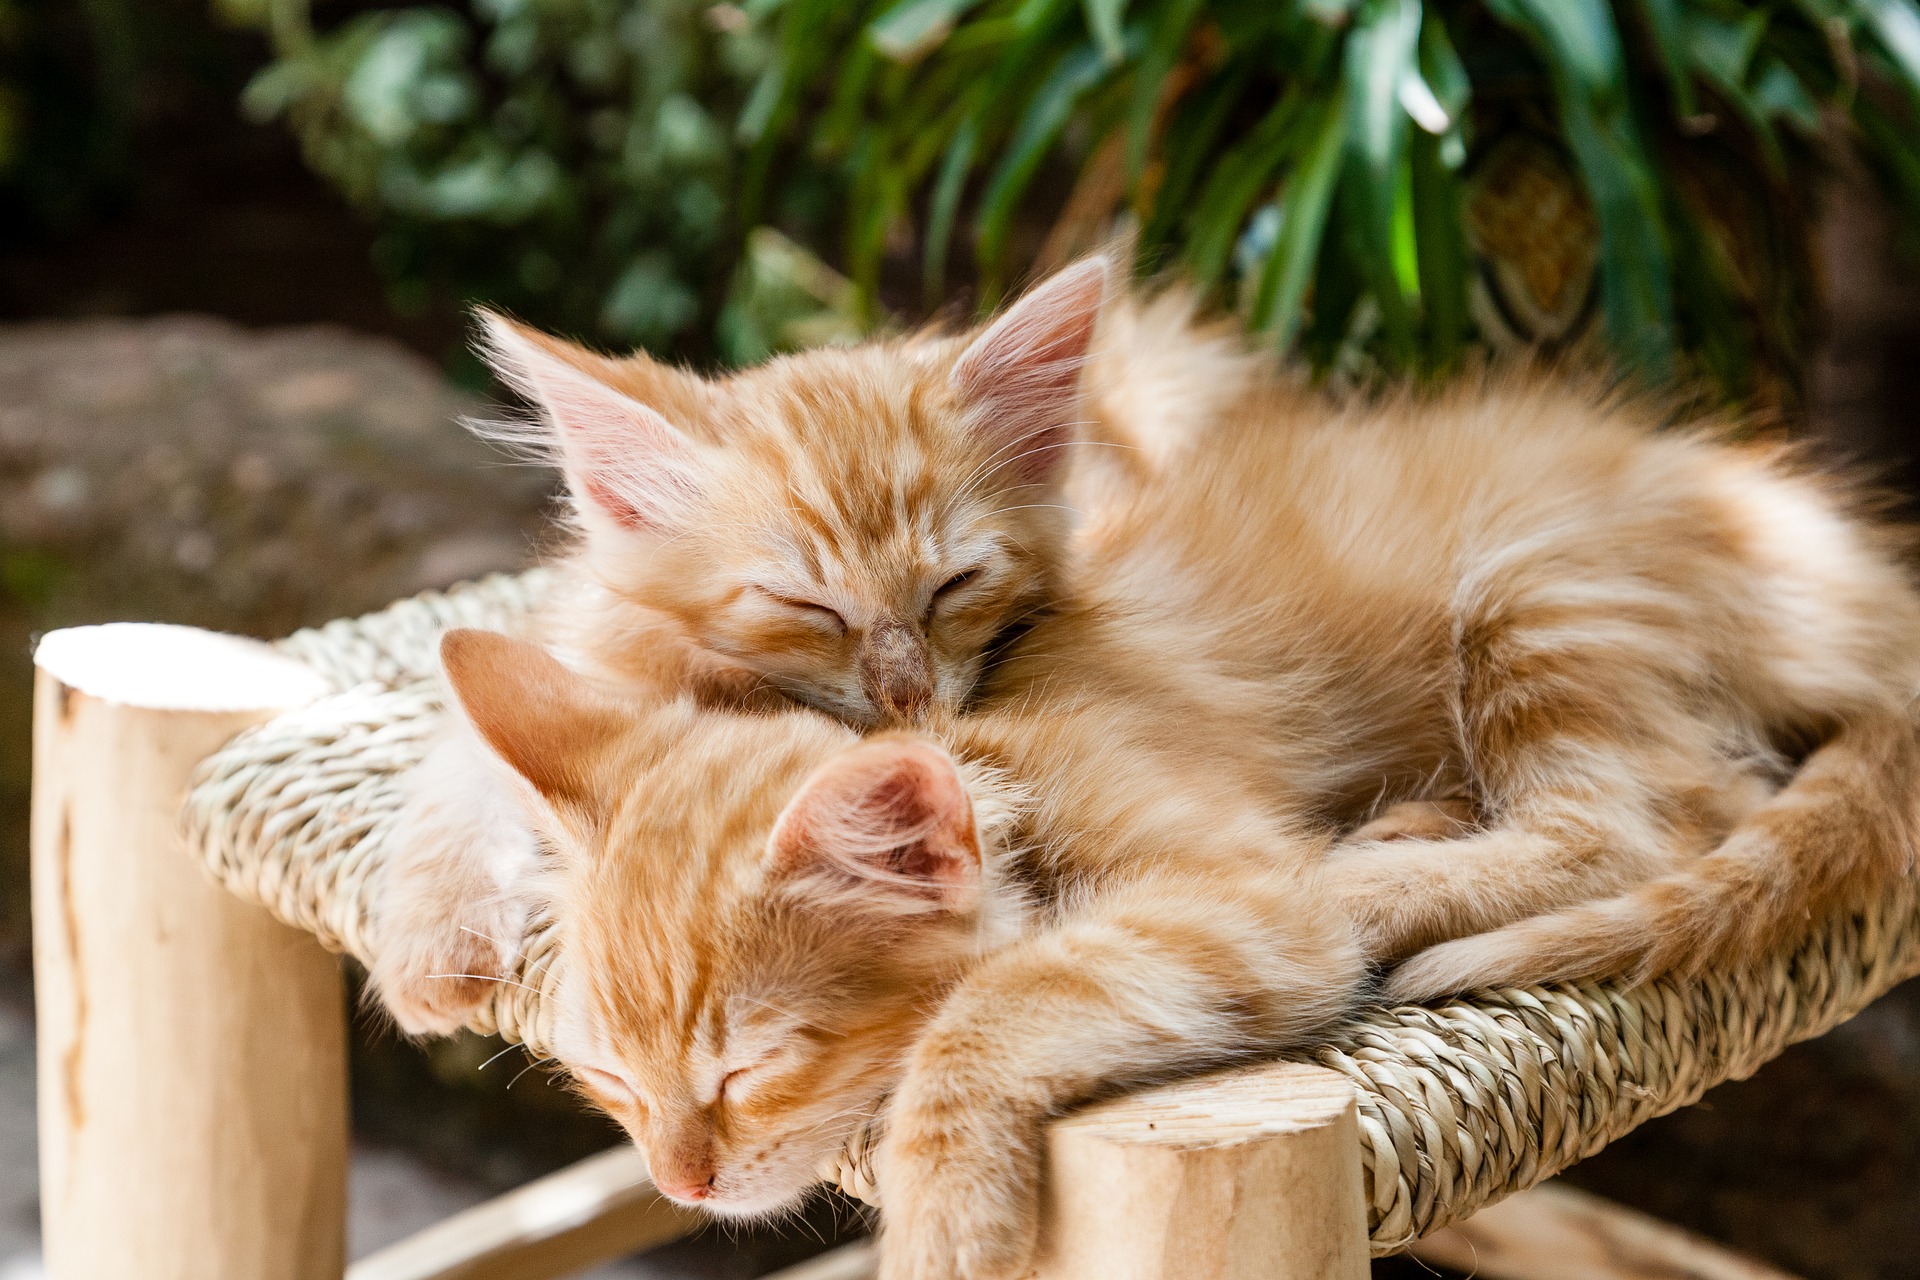 two sleepy kittens